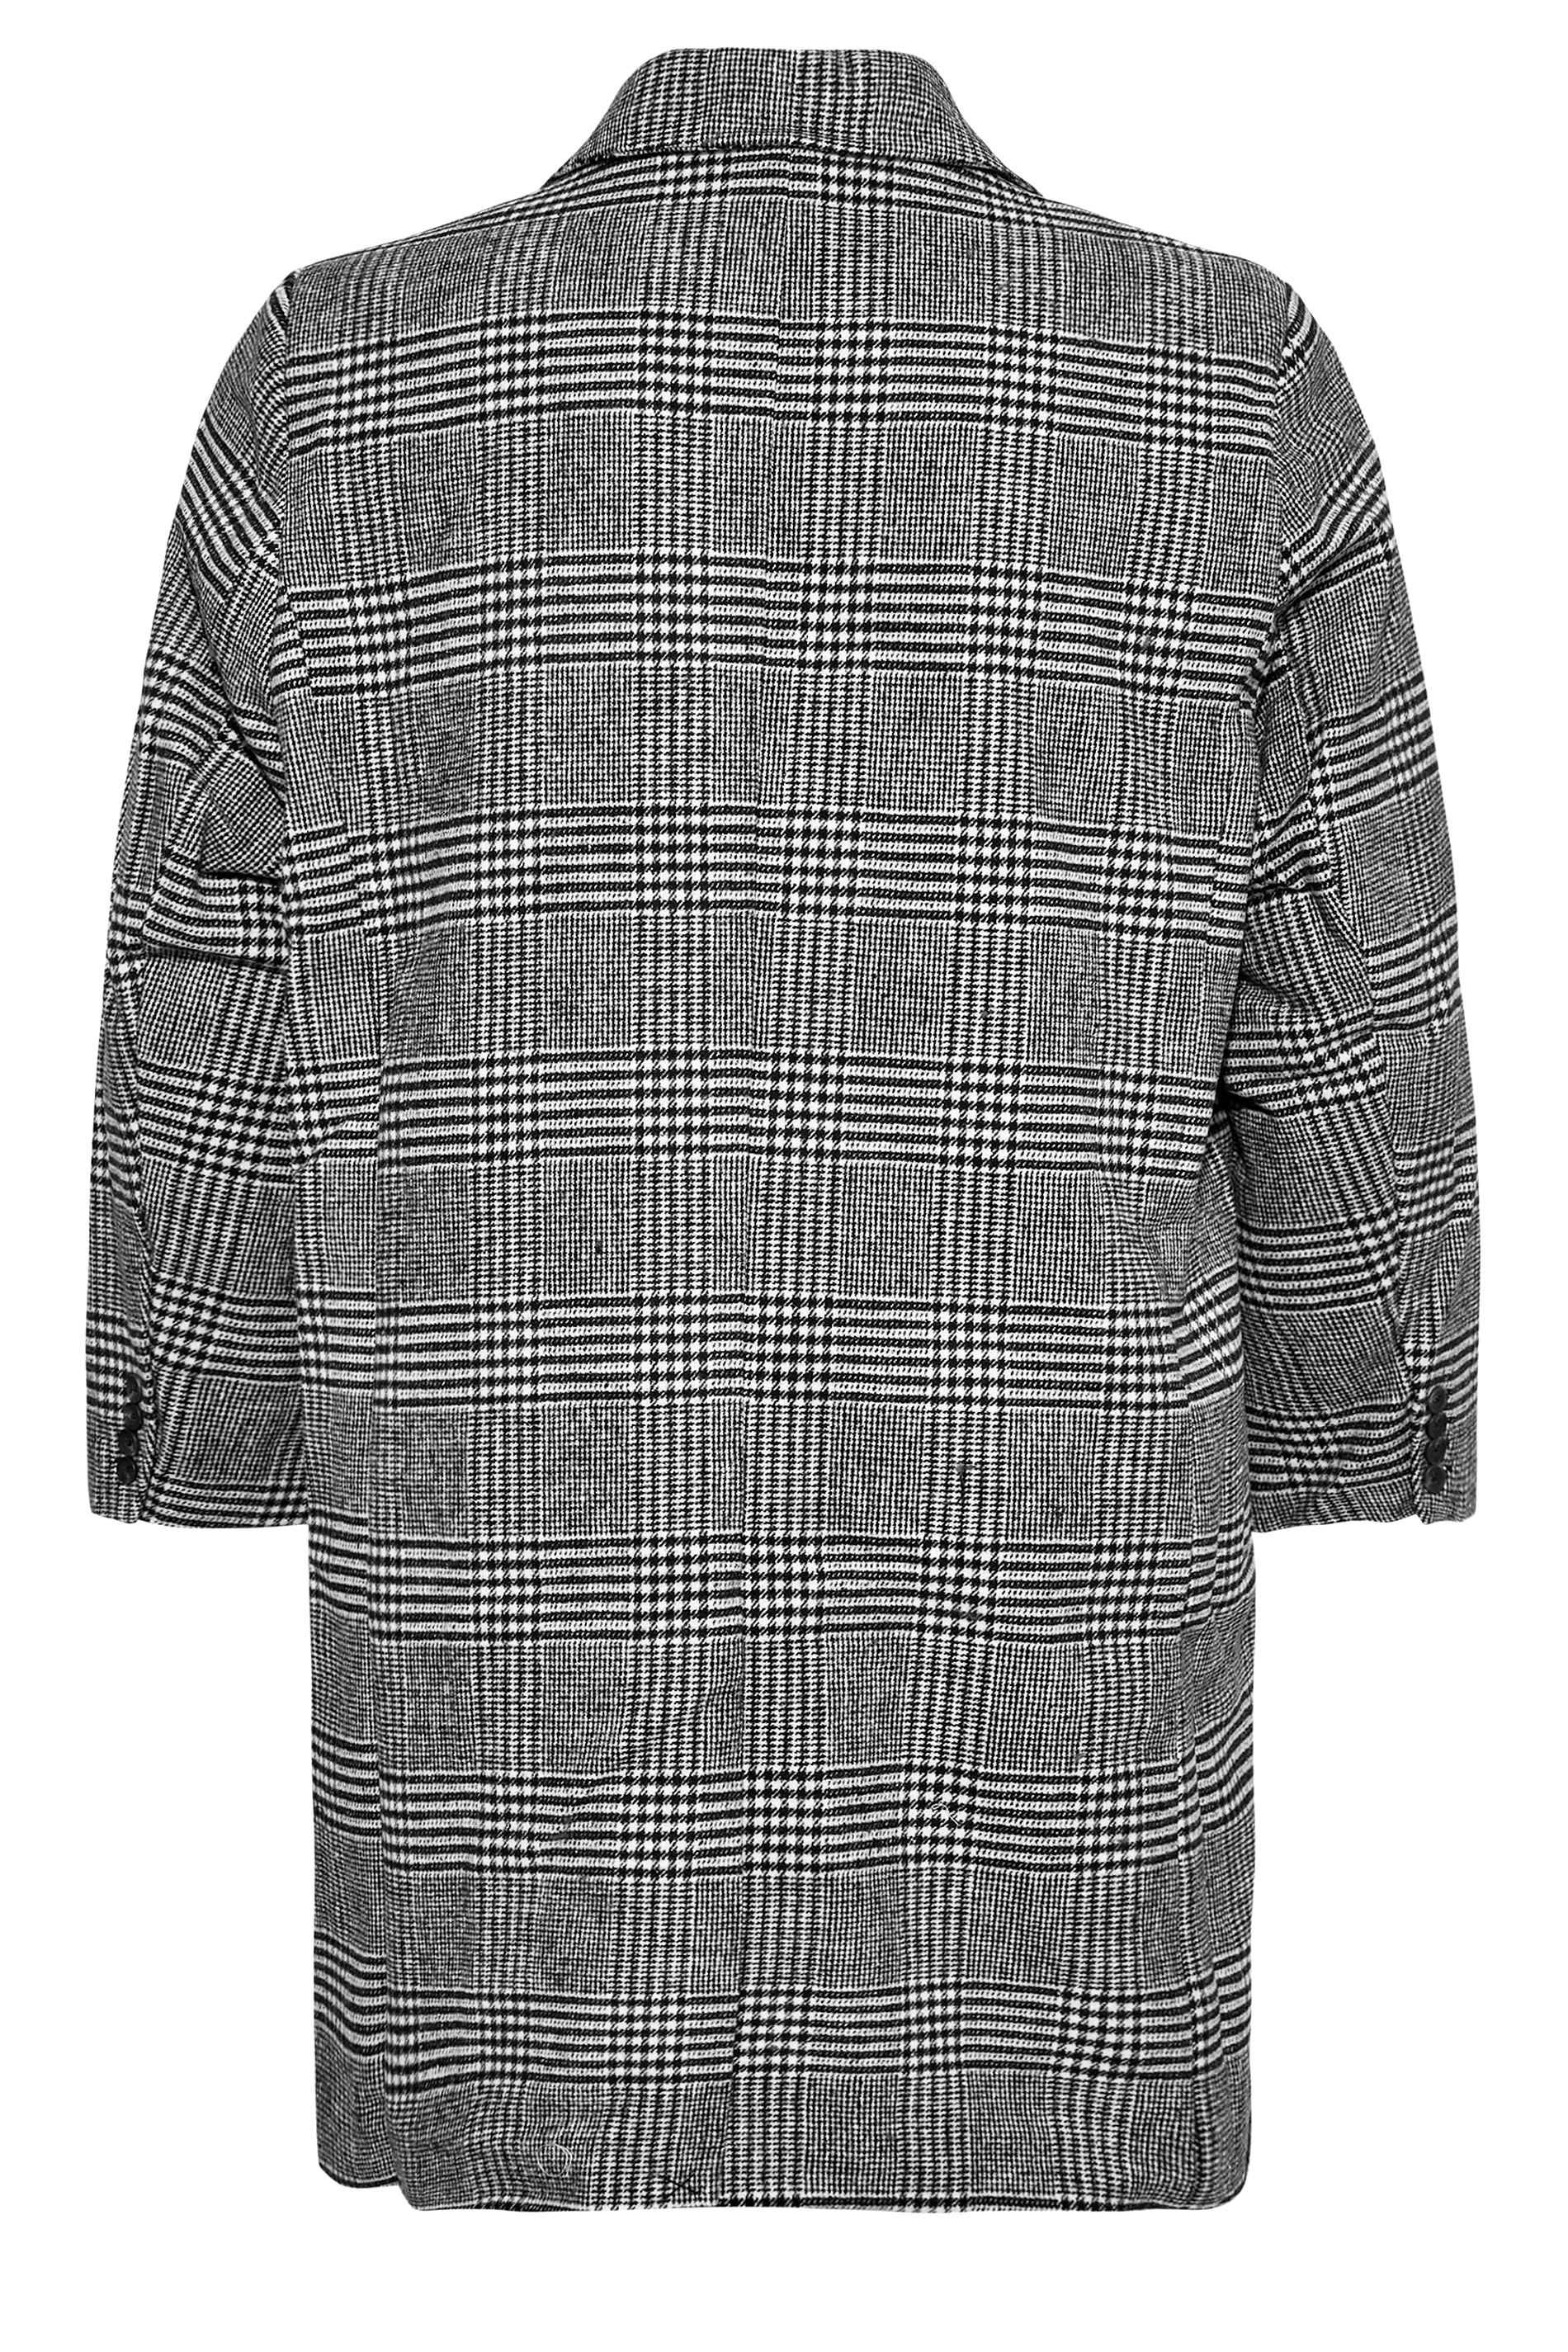 BadRhino Grey Check Overcoat | BadRhino